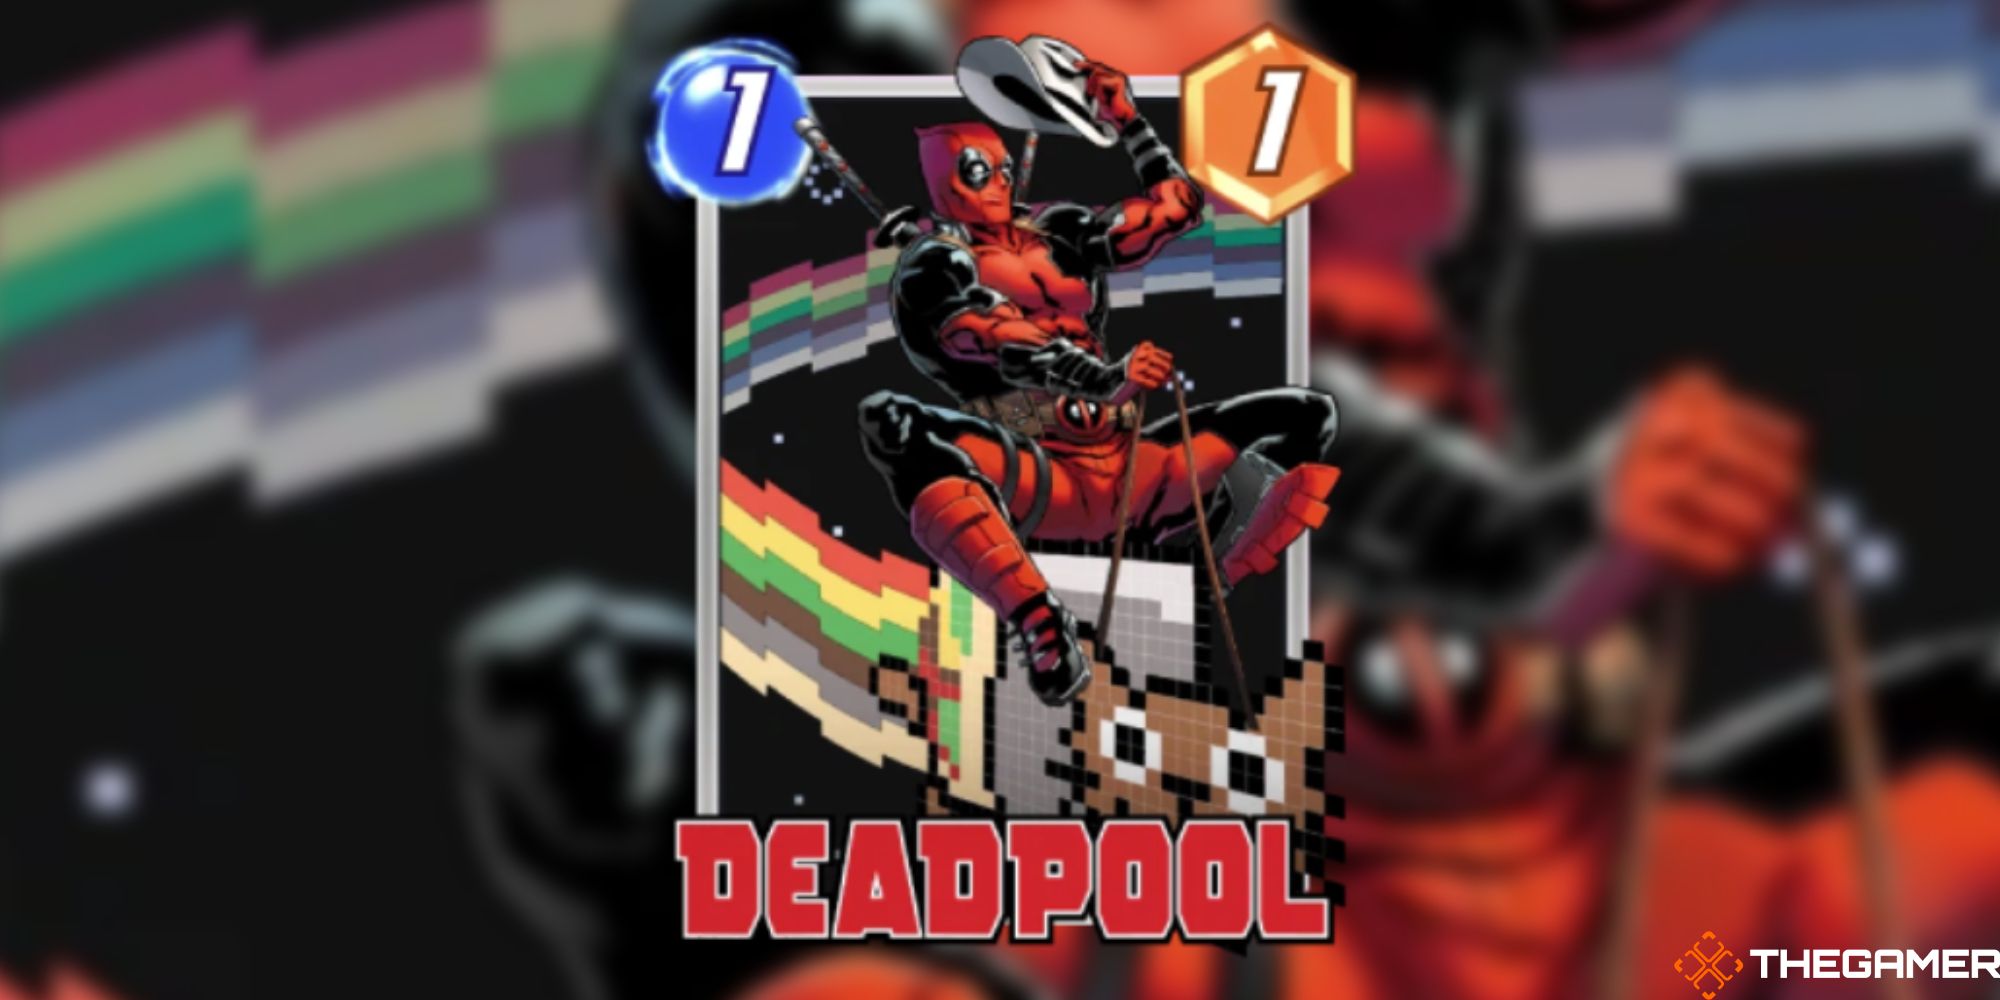 Marvel Snap - Deadpool Variant on a blurred background